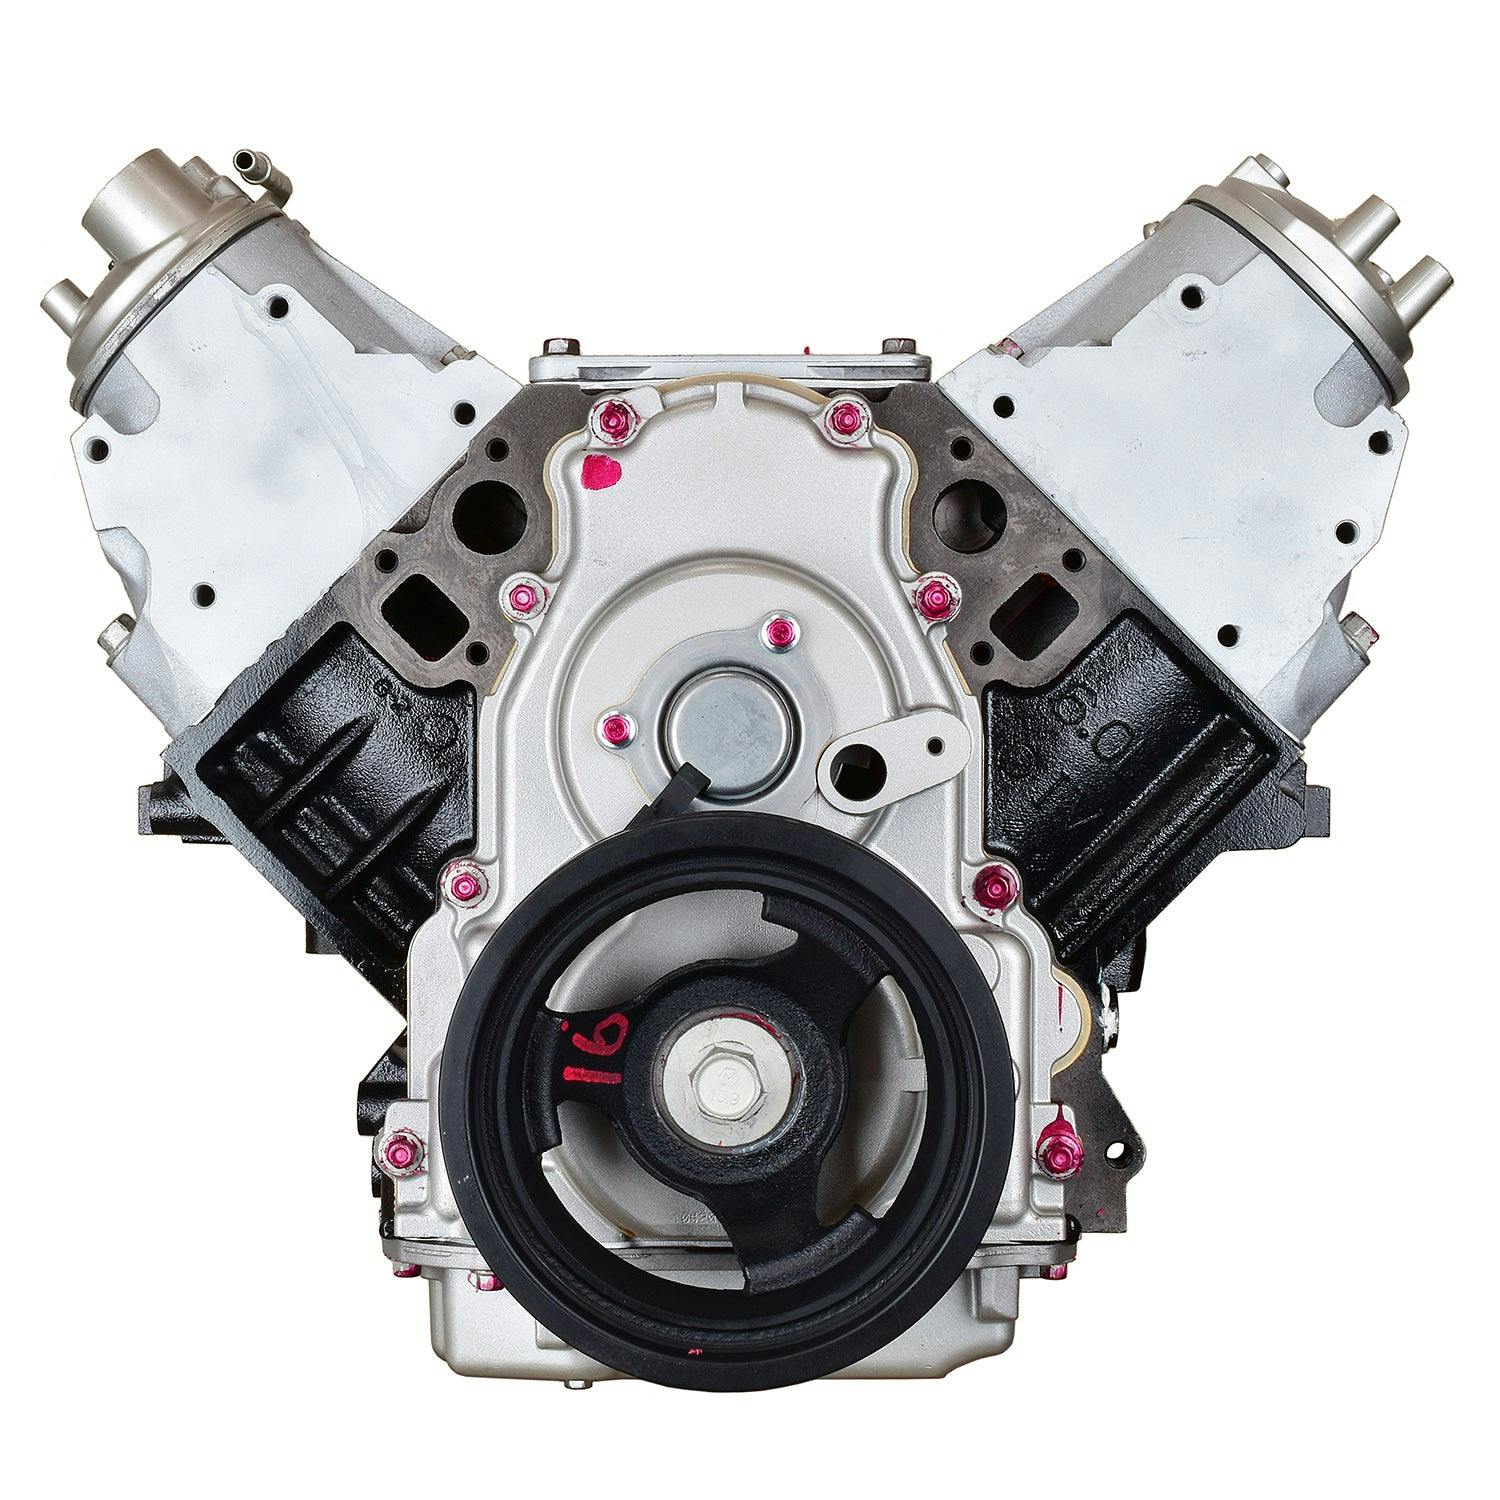 Engine for GMC Family Heavy Duty Trucks and SUVs with 6.0L V8 (10-20)